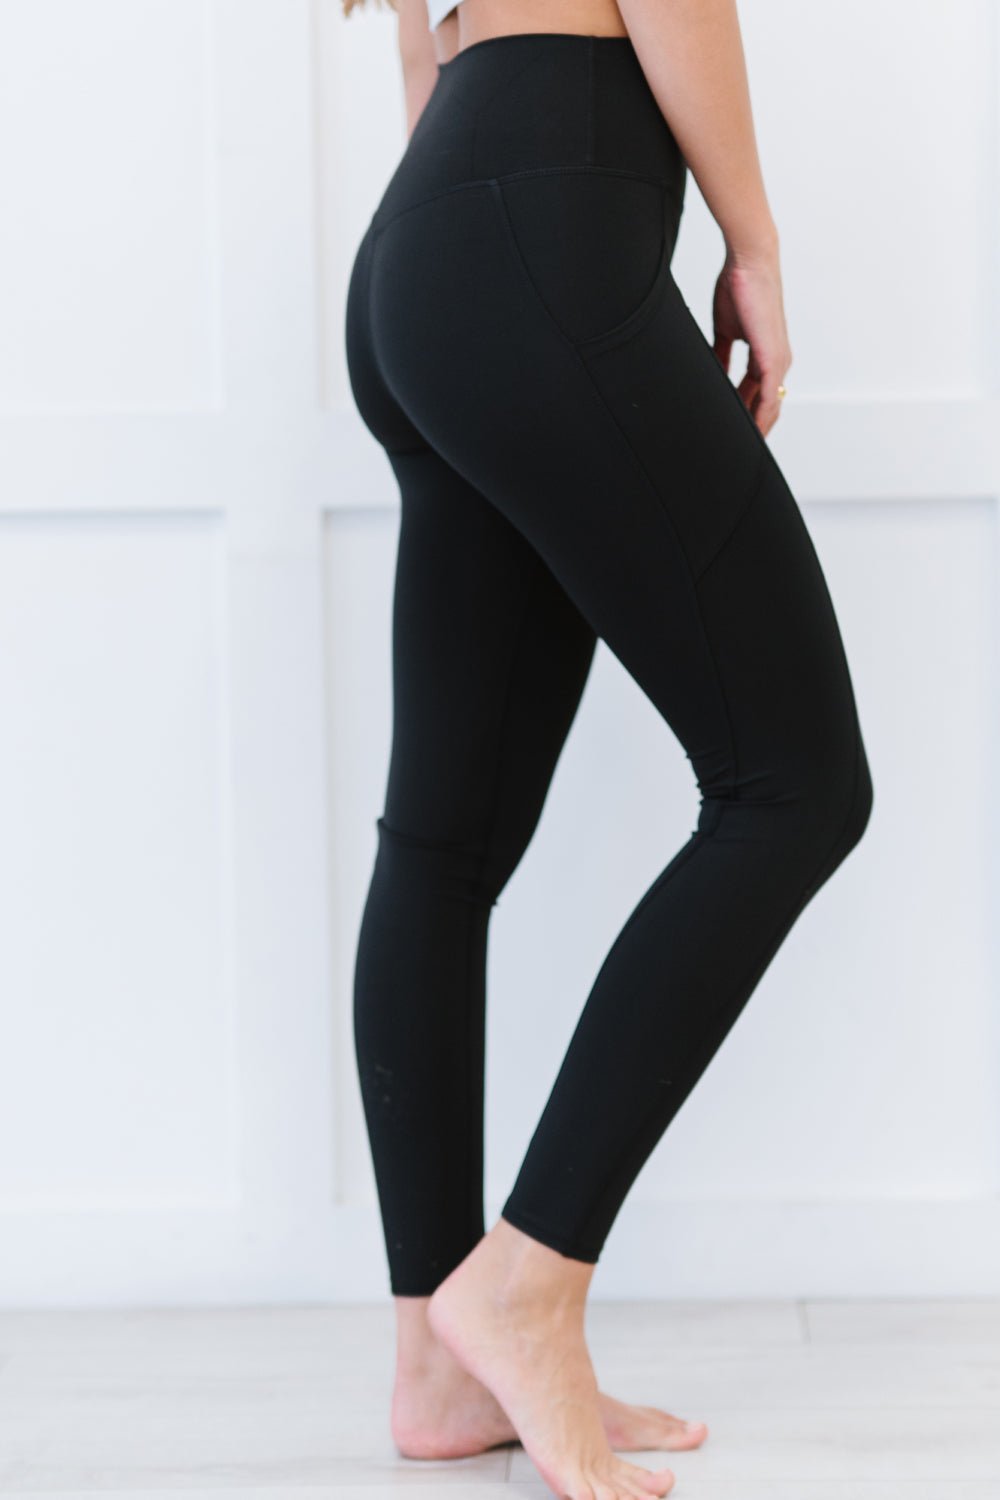 Women Shorts Quick Drying Workout Leggings With Pockets InstaStyled | Workout  leggings with pockets, Workout leggings, Leggings